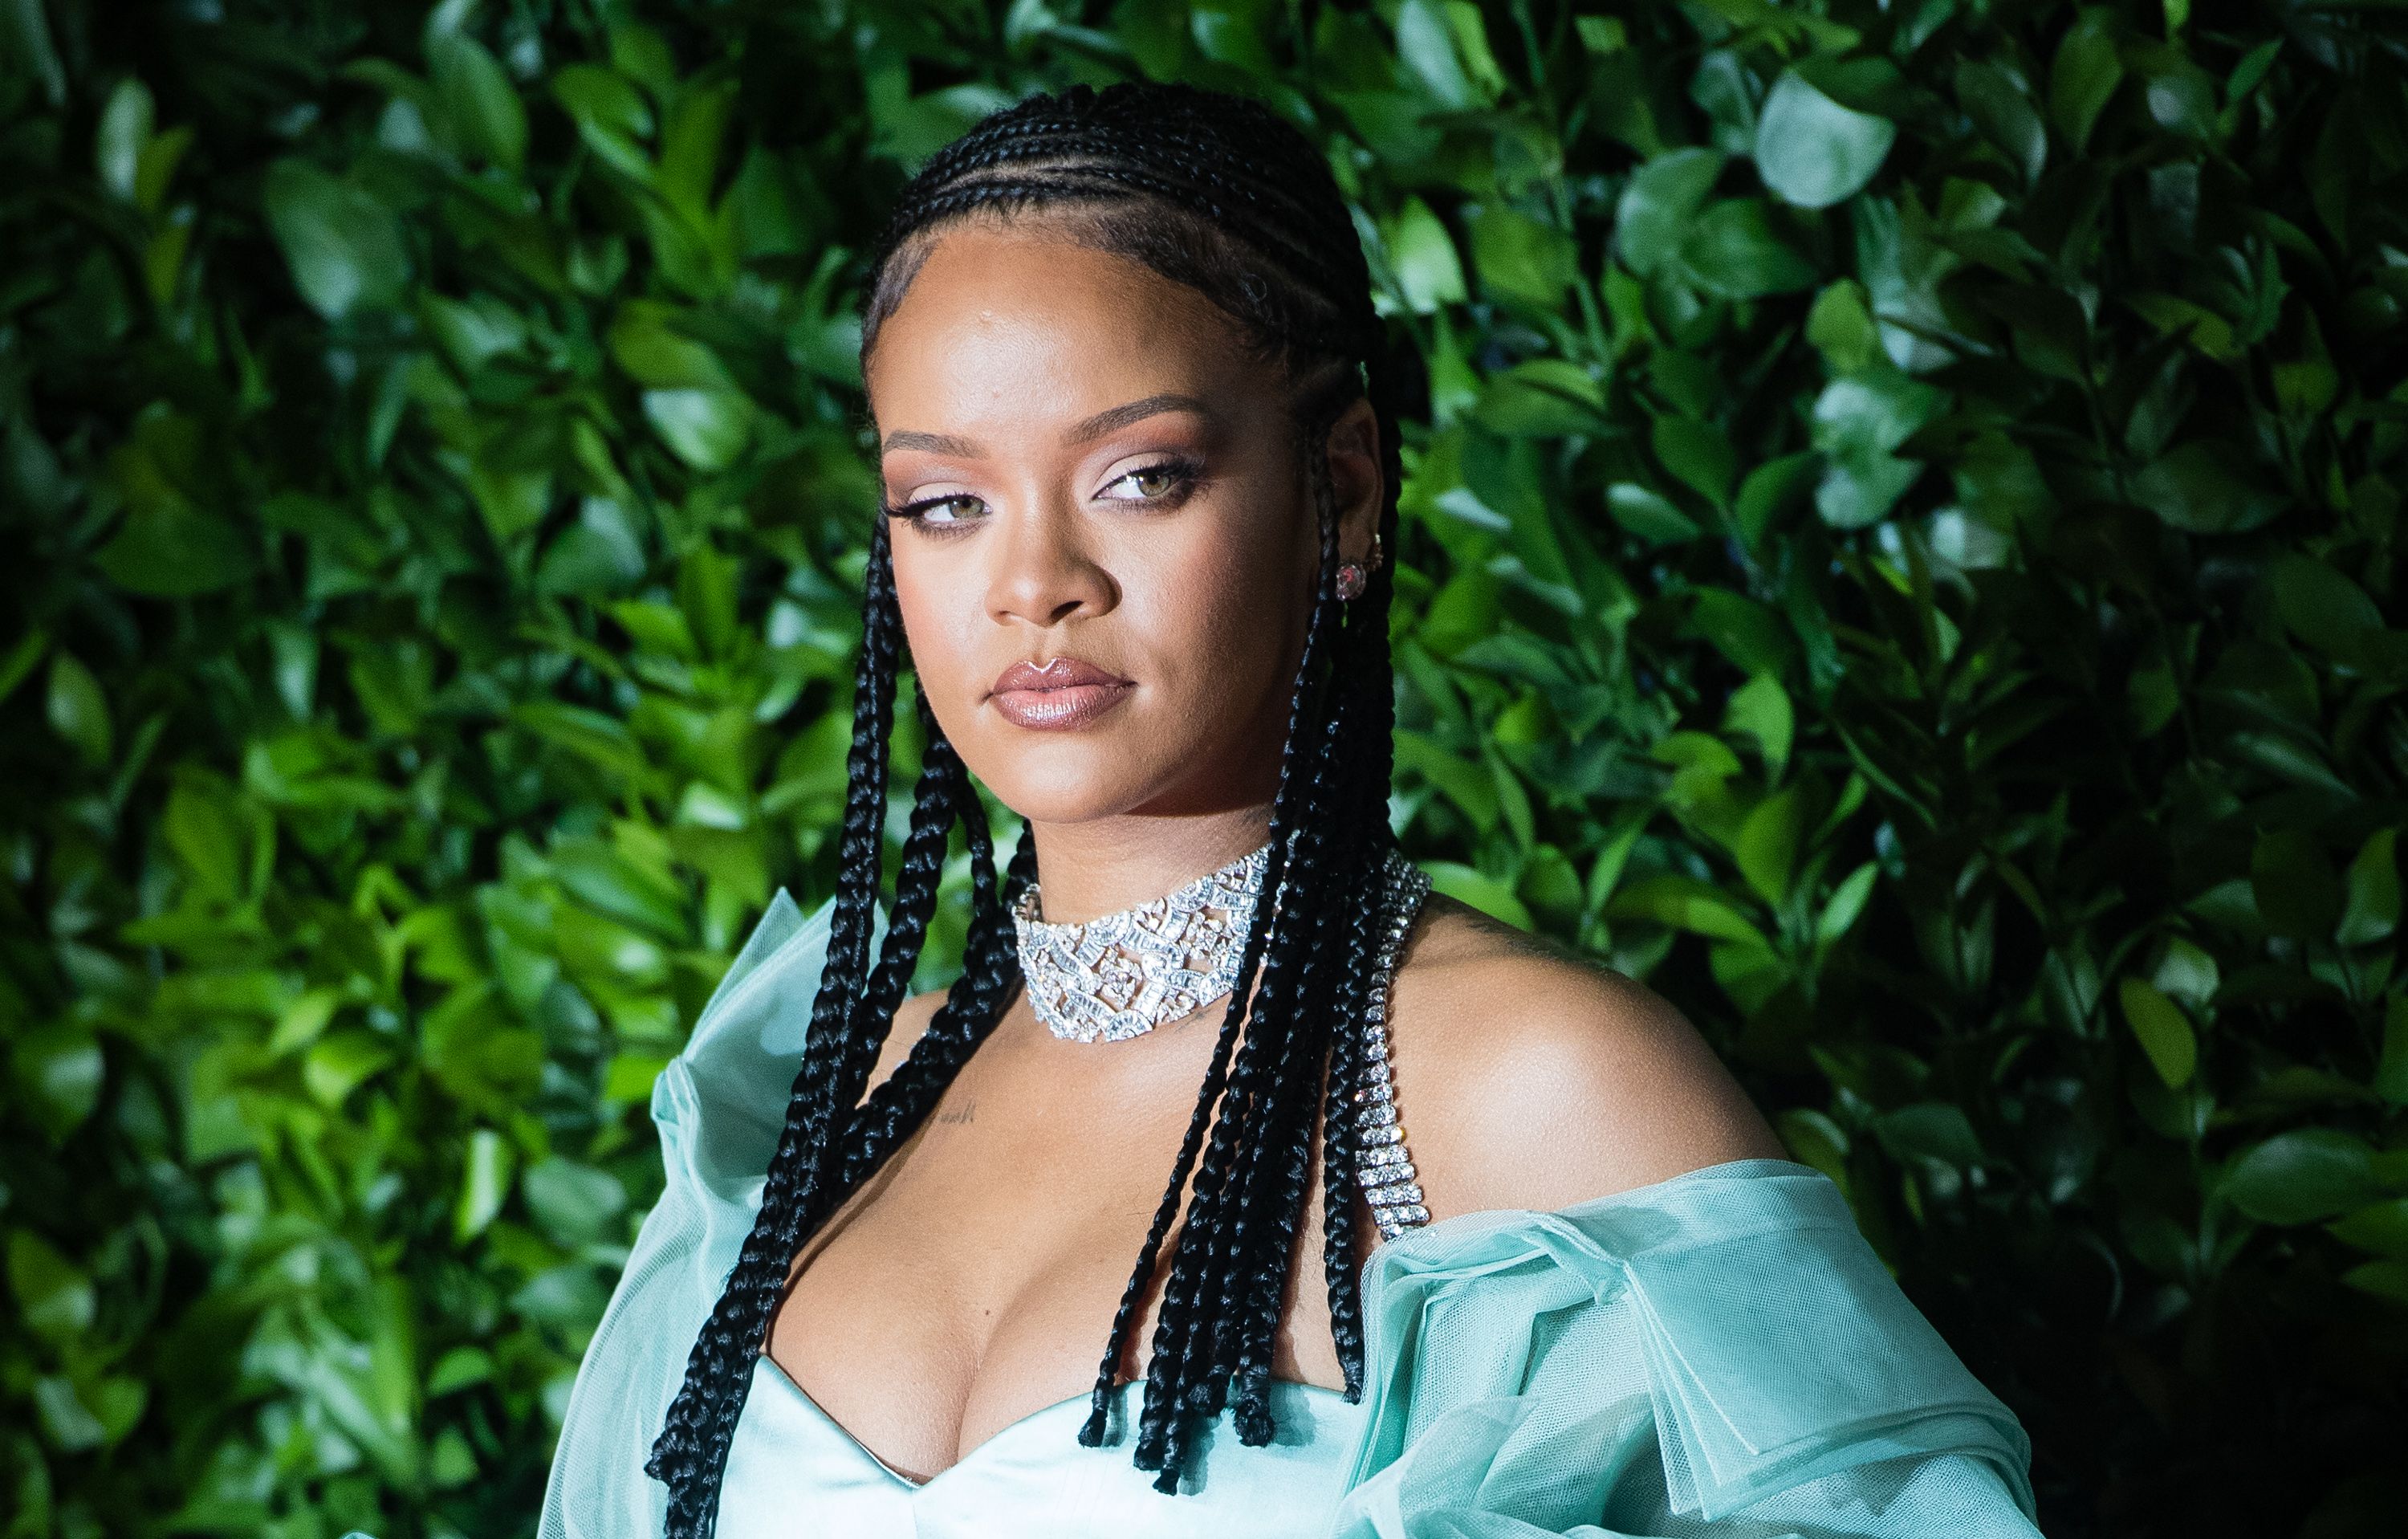 Rihanna Donates 5 Million To Help Coronavirus Relief